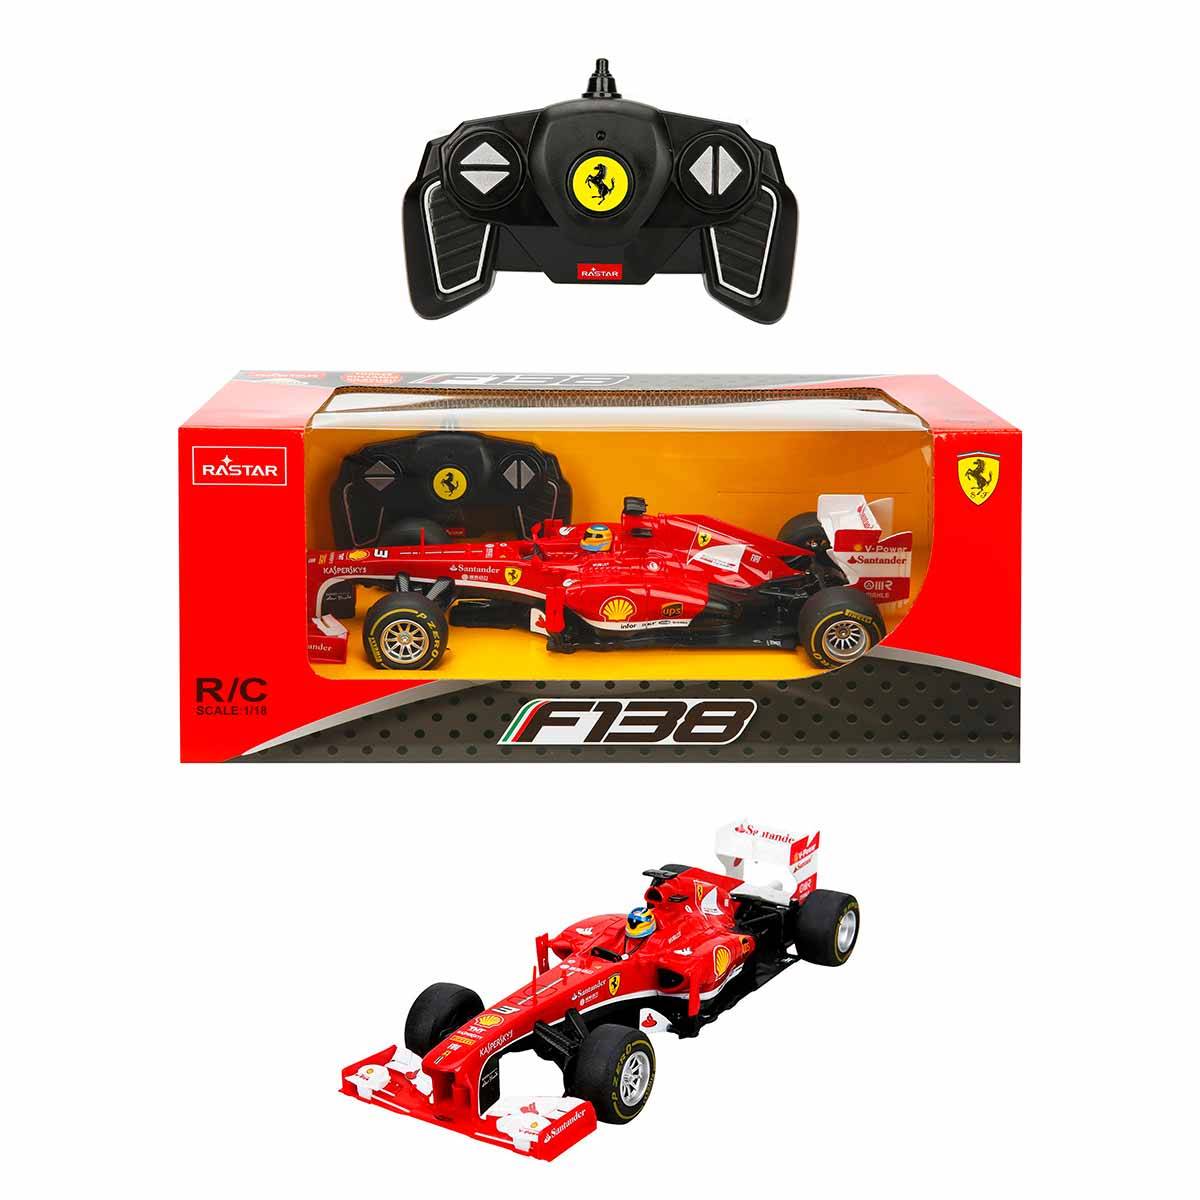 Rastar R/C 1/18 Formula 1 Ferrari F138 Uzaktan Kumandalı Araba